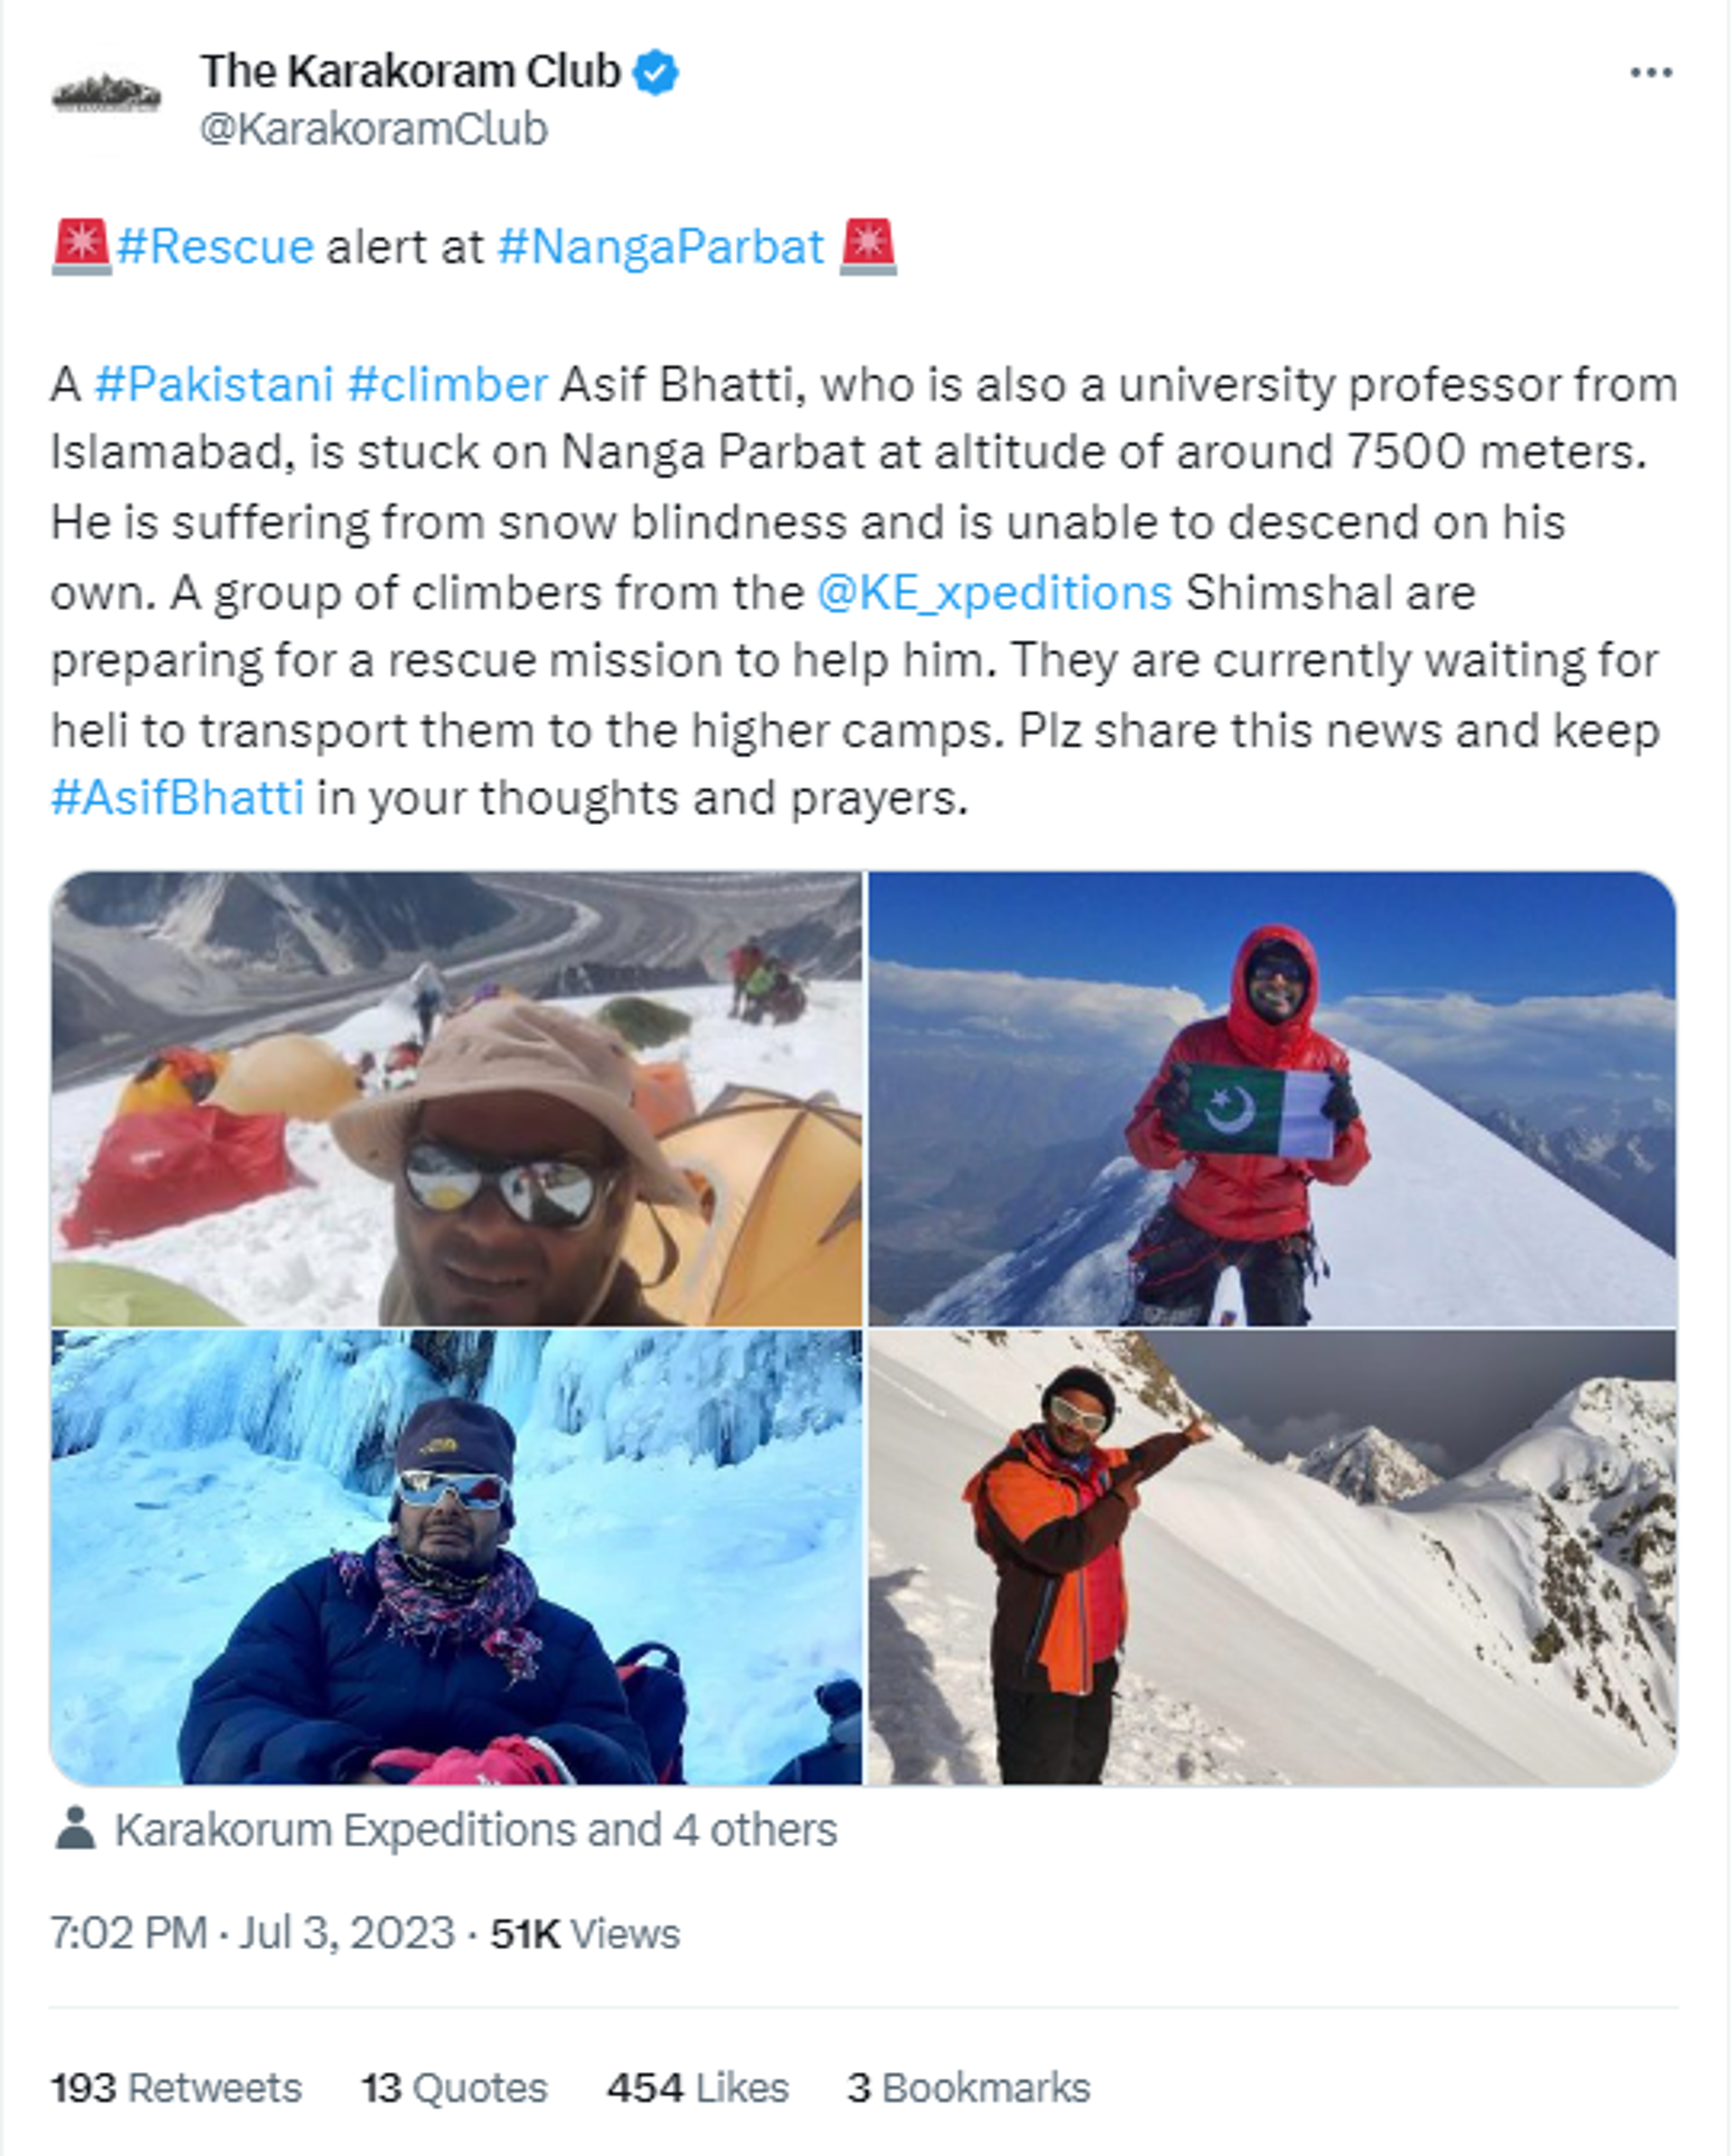 Pakistan Mountaineer Asif Bhatti Stranded At Nanga Parbat Due To Snow Blindness - Sputnik India, 1920, 04.07.2023